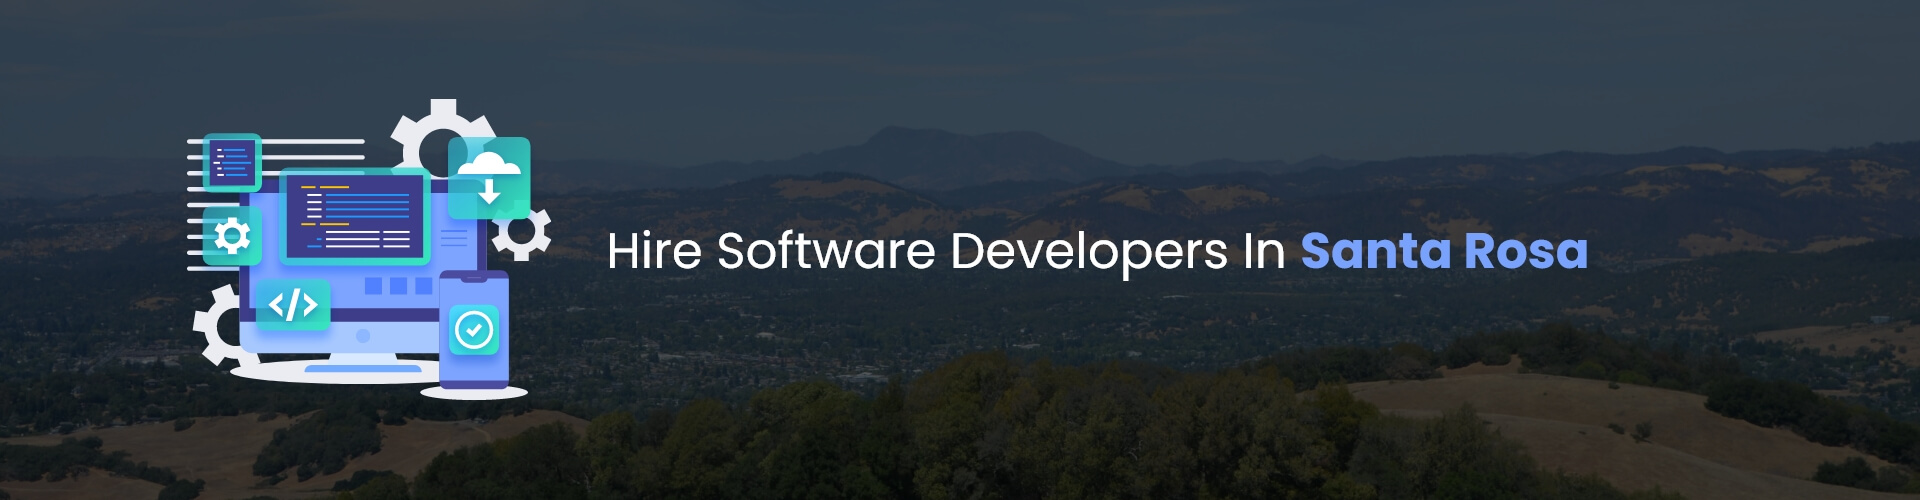 hire software developers in santa rosa